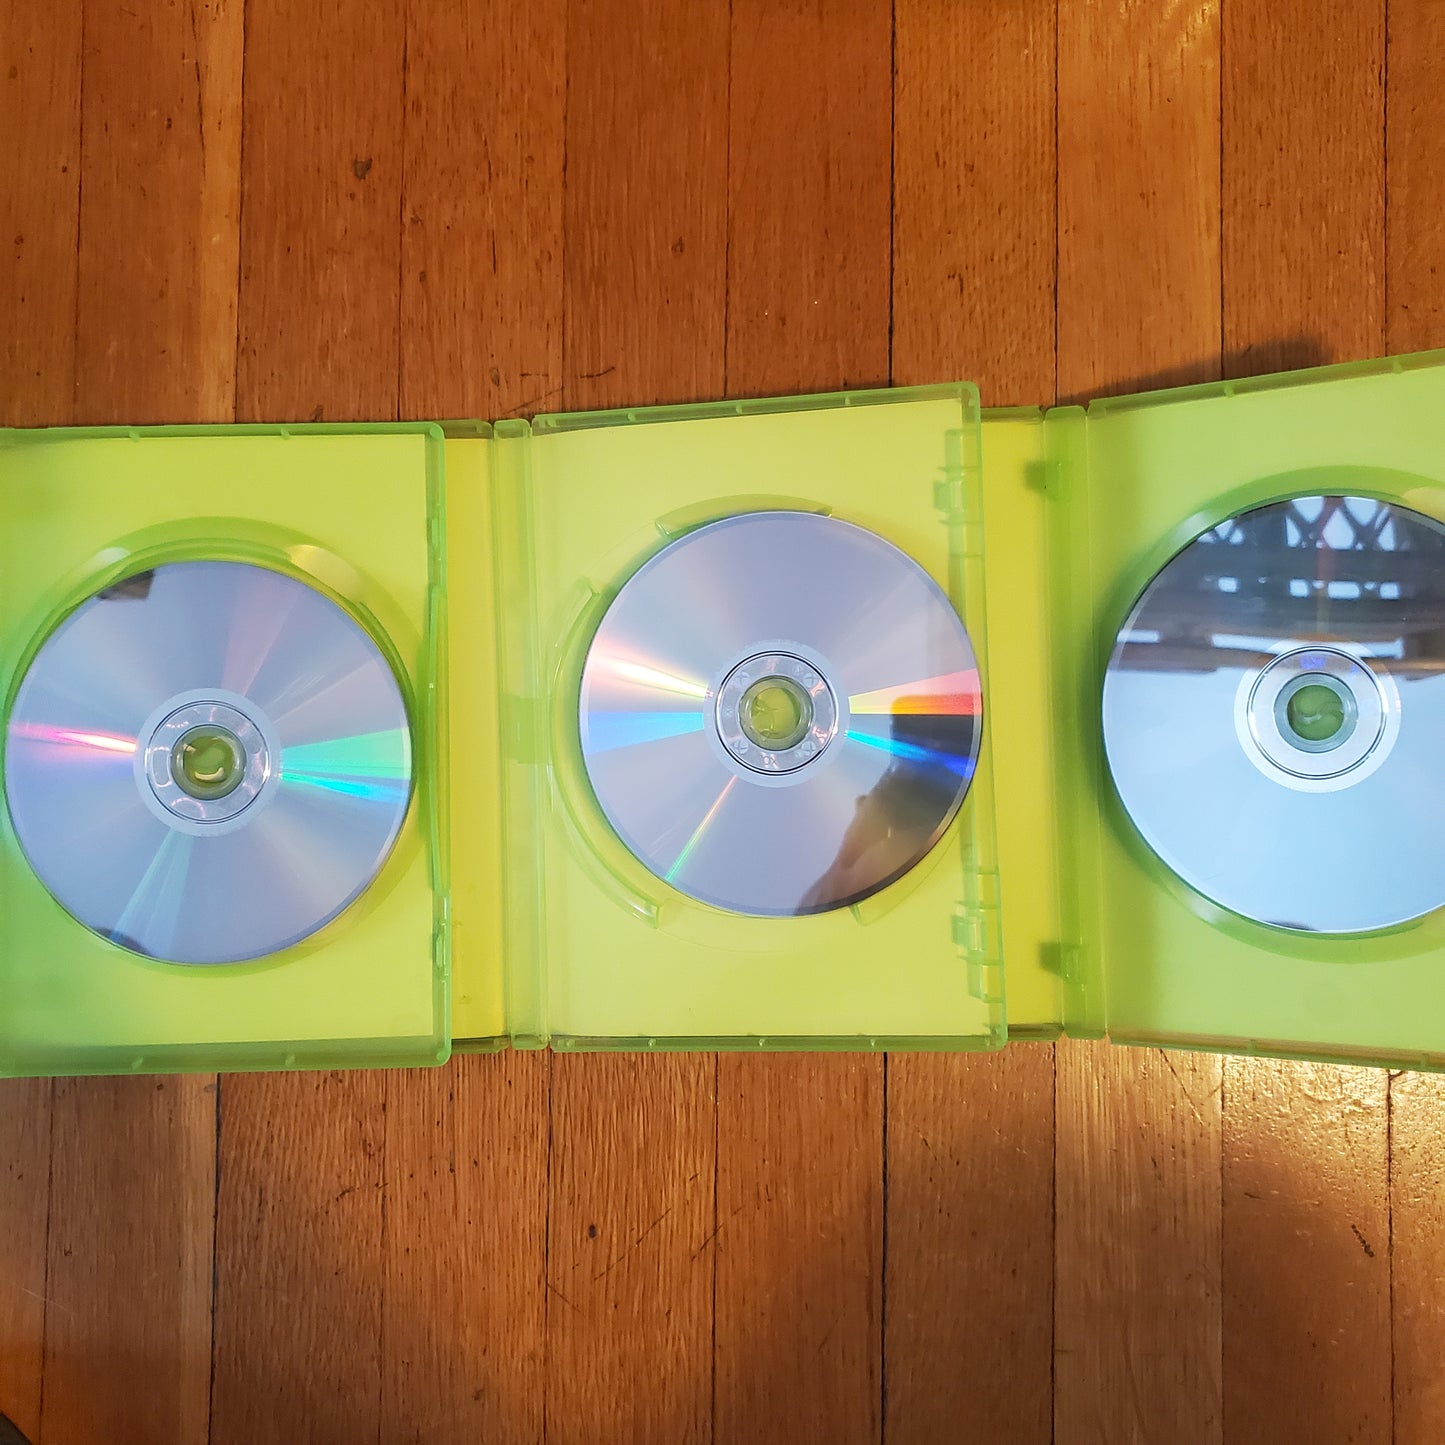 Gears of War Bundle - Xbox 360